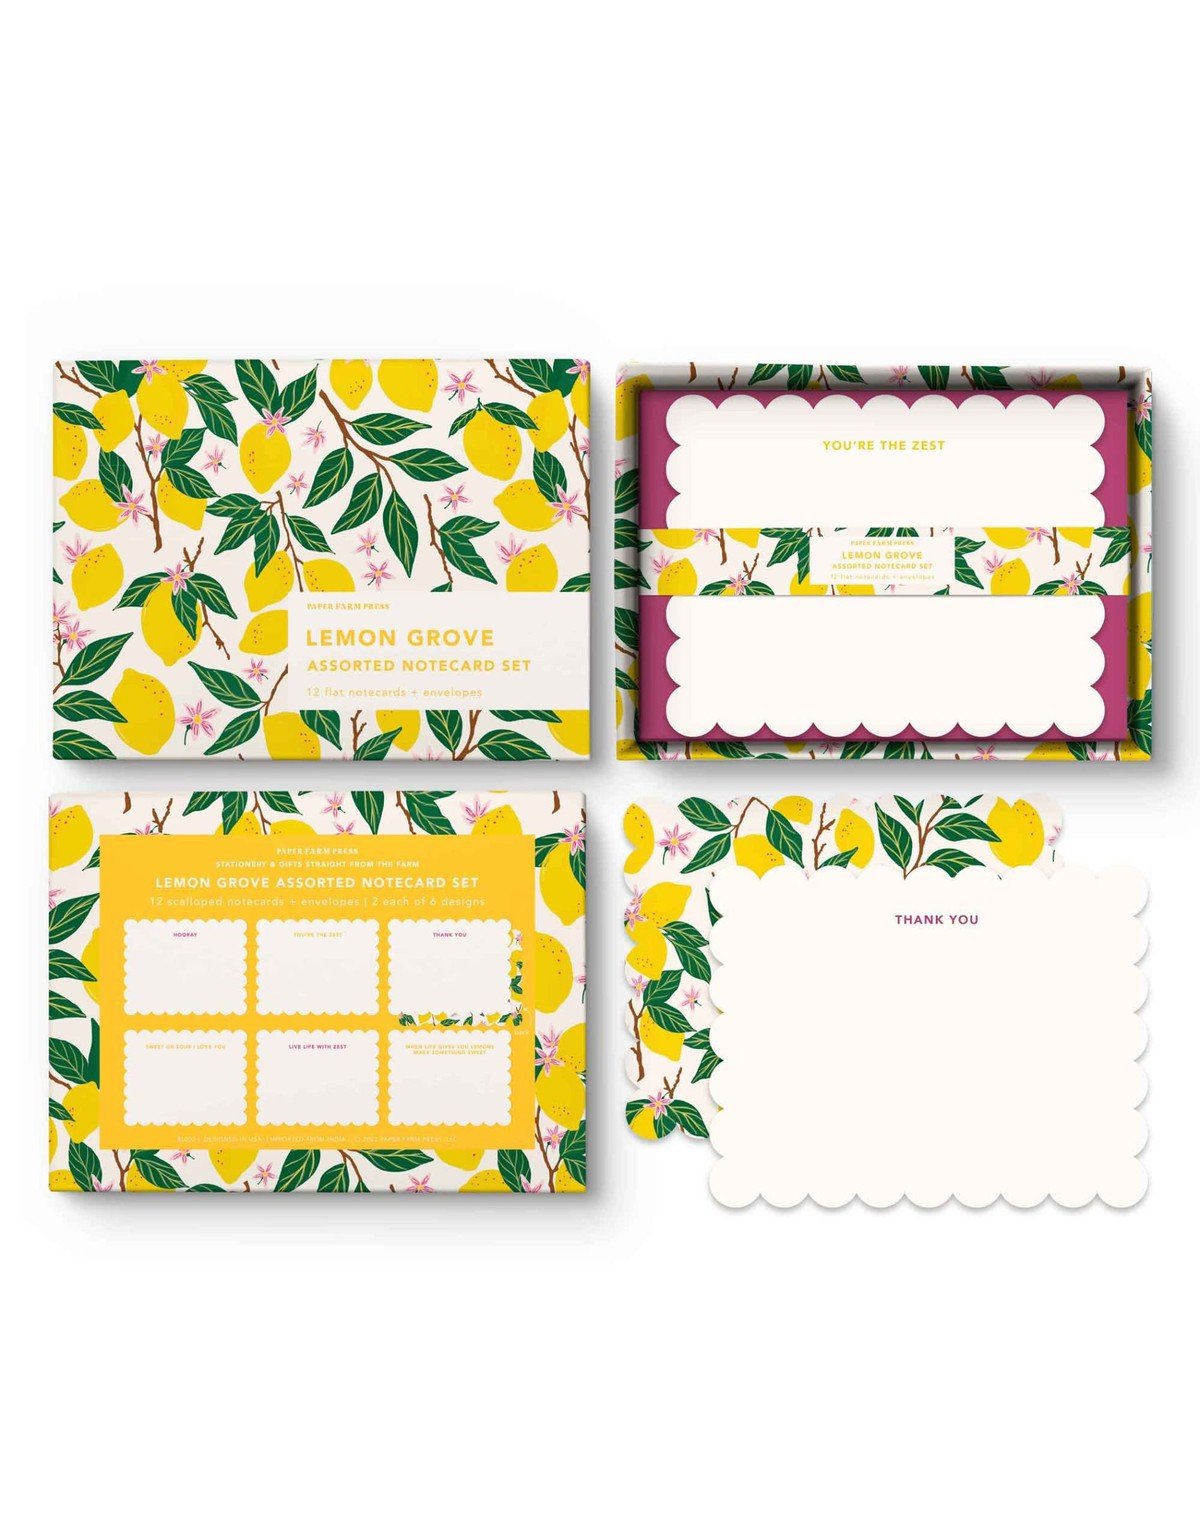 Lemon Grove Assorted Notecard Set item